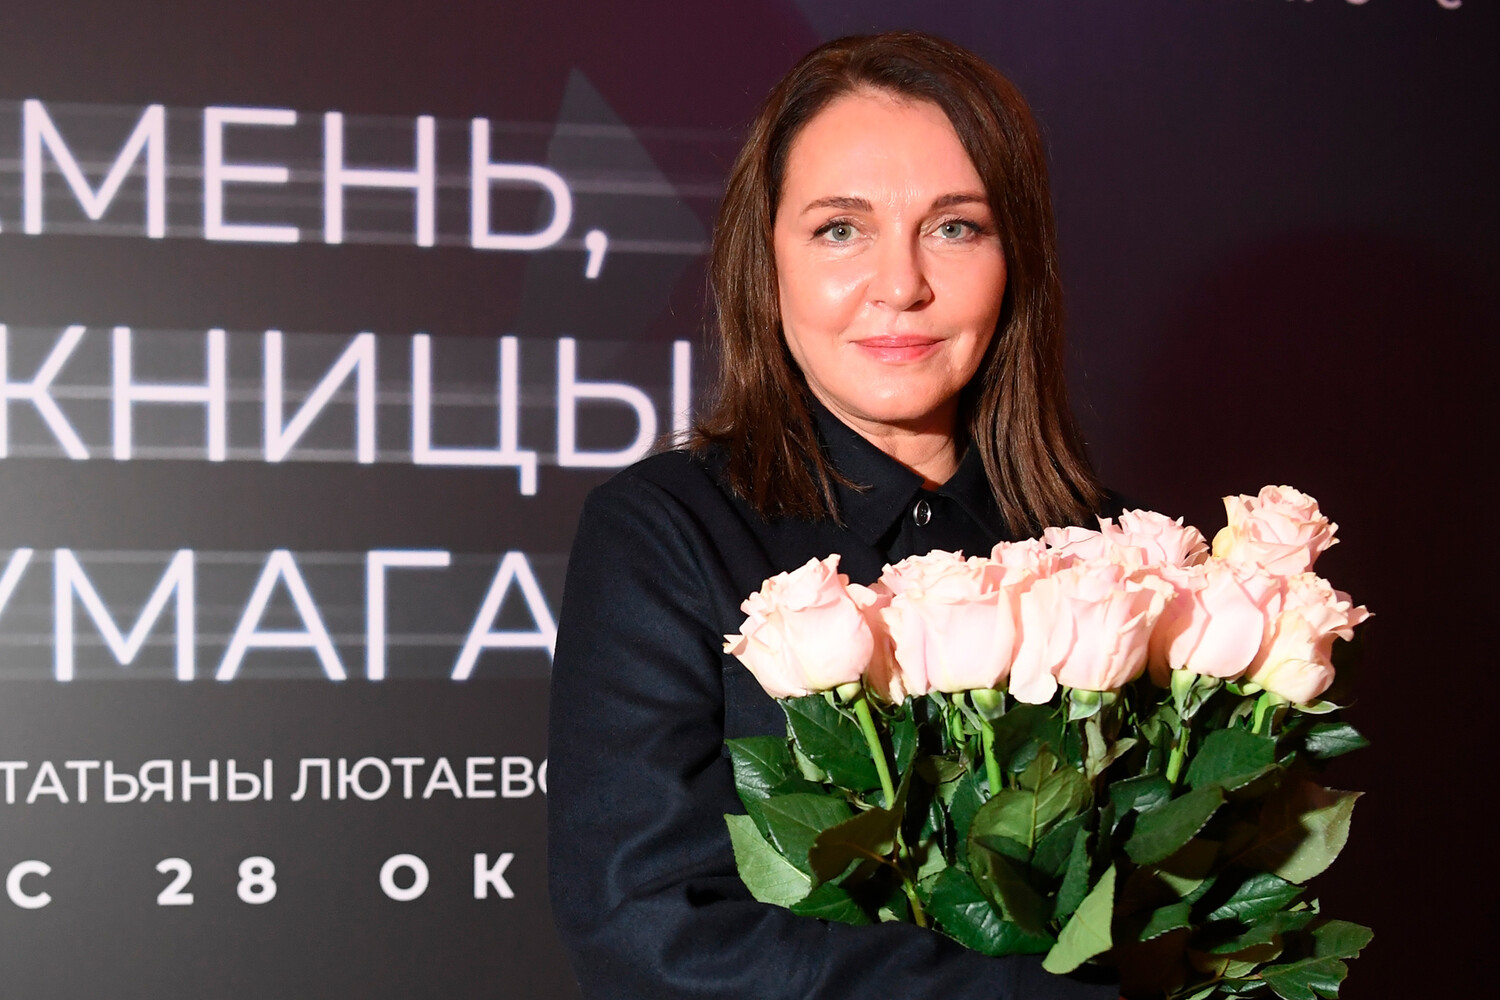 Актриса Татьяна Лютаева назвала себя «сумасшедшей» бабушкой